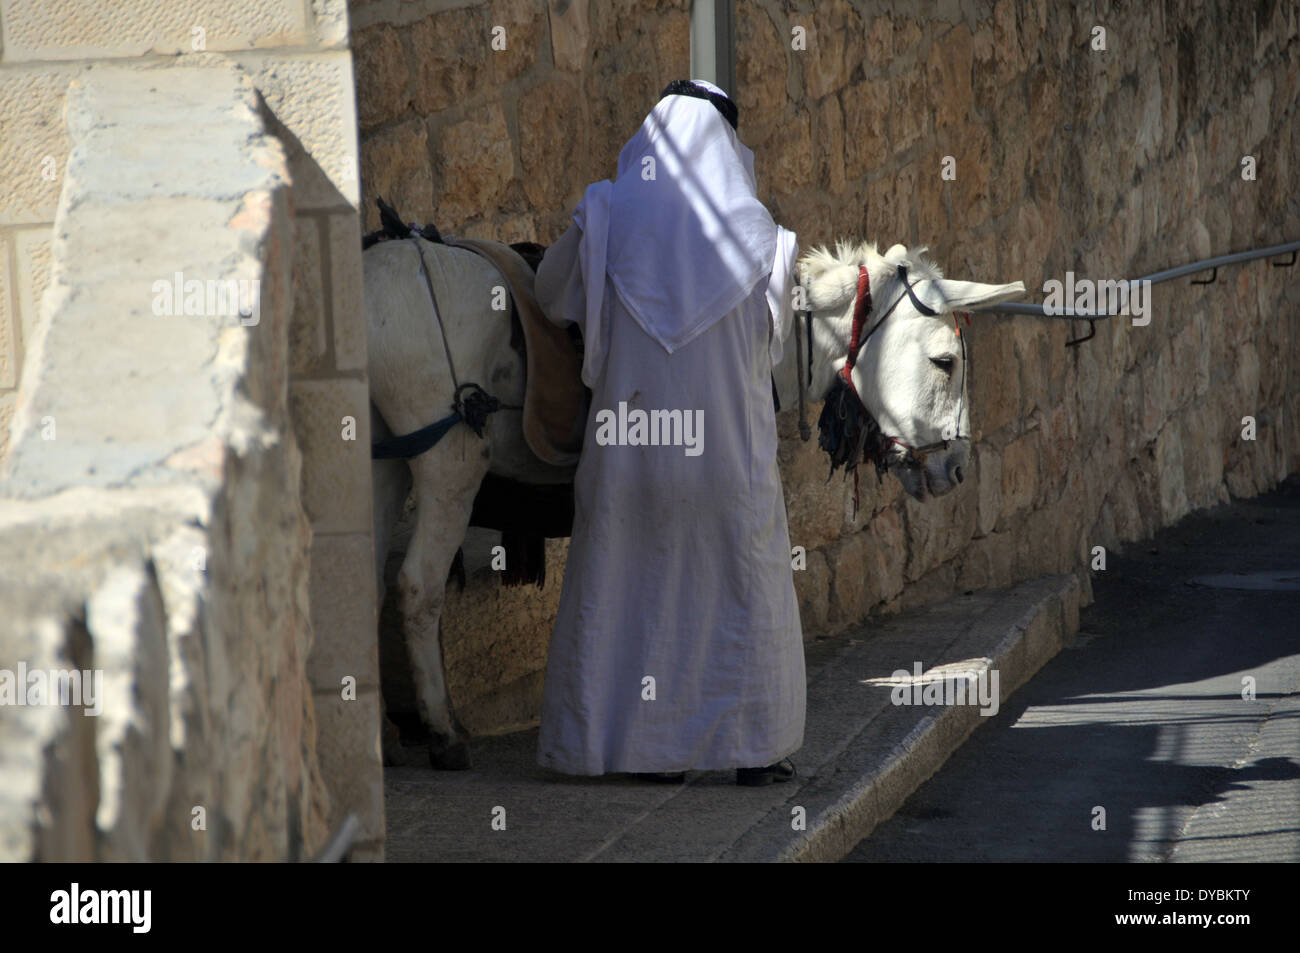 Man in Arabic tunic and donkey, Jerusalem, Israel Stock Photo